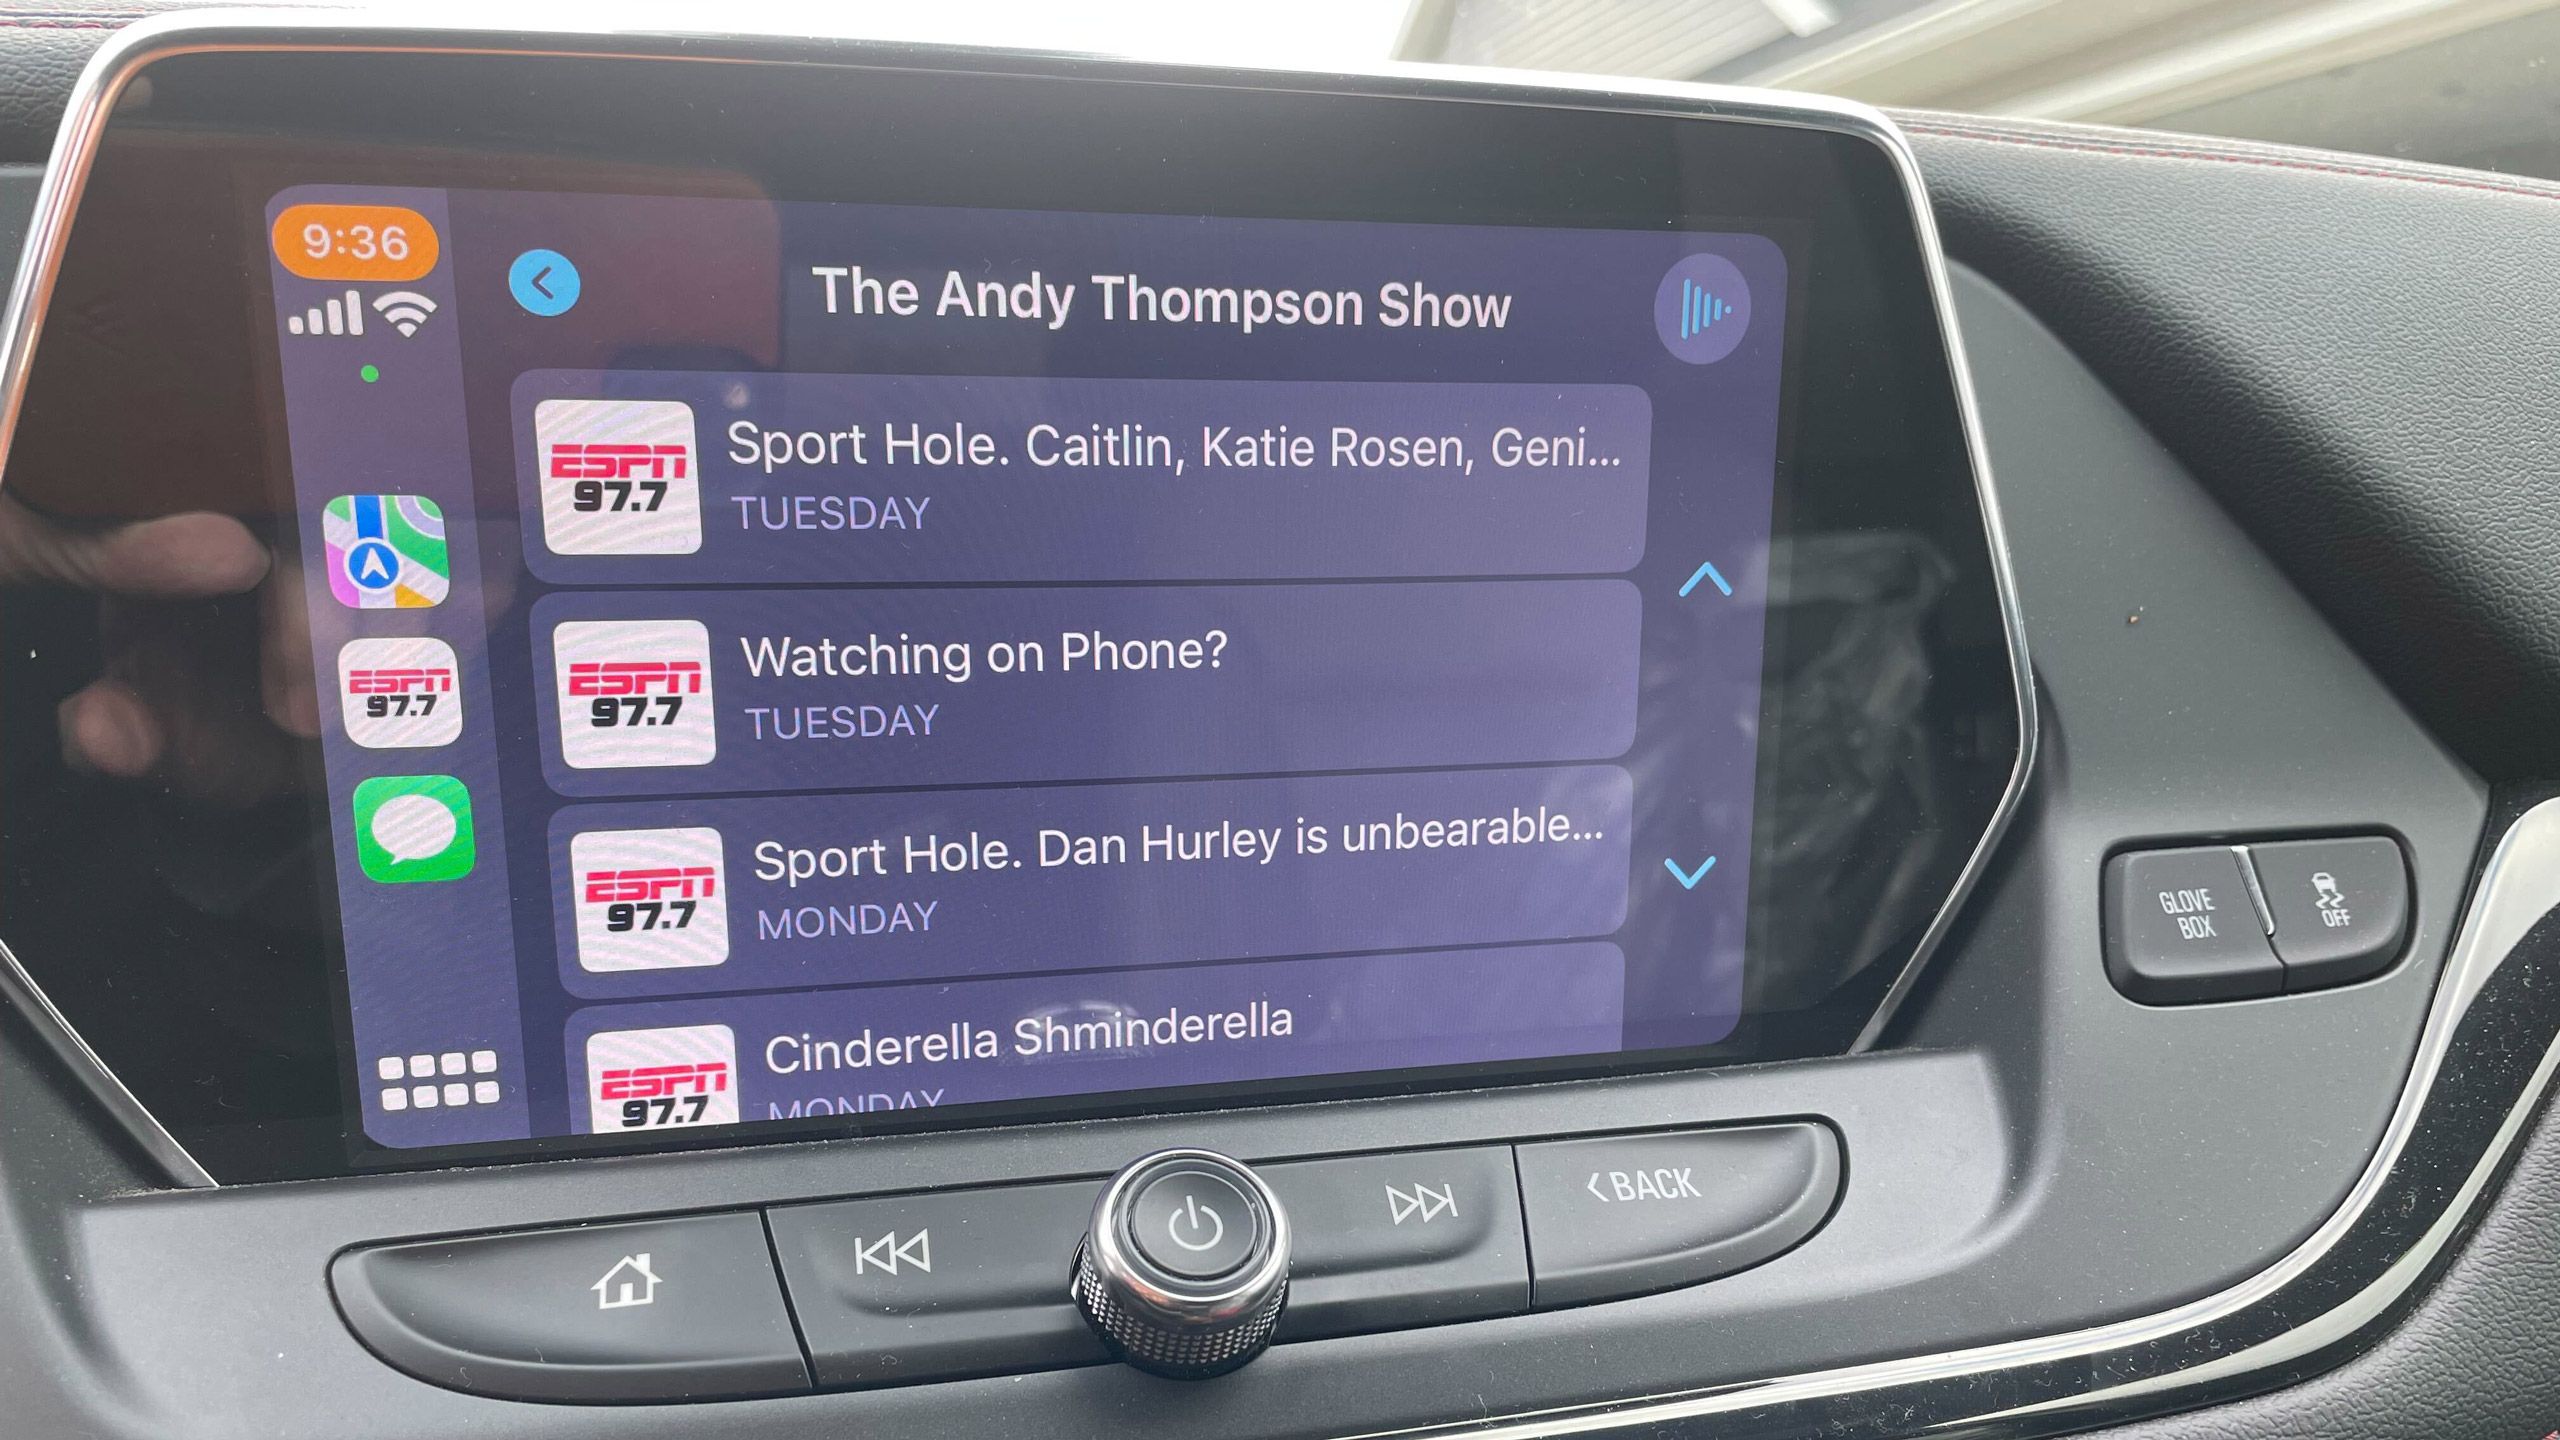 The ESPN radio app on CarPlay